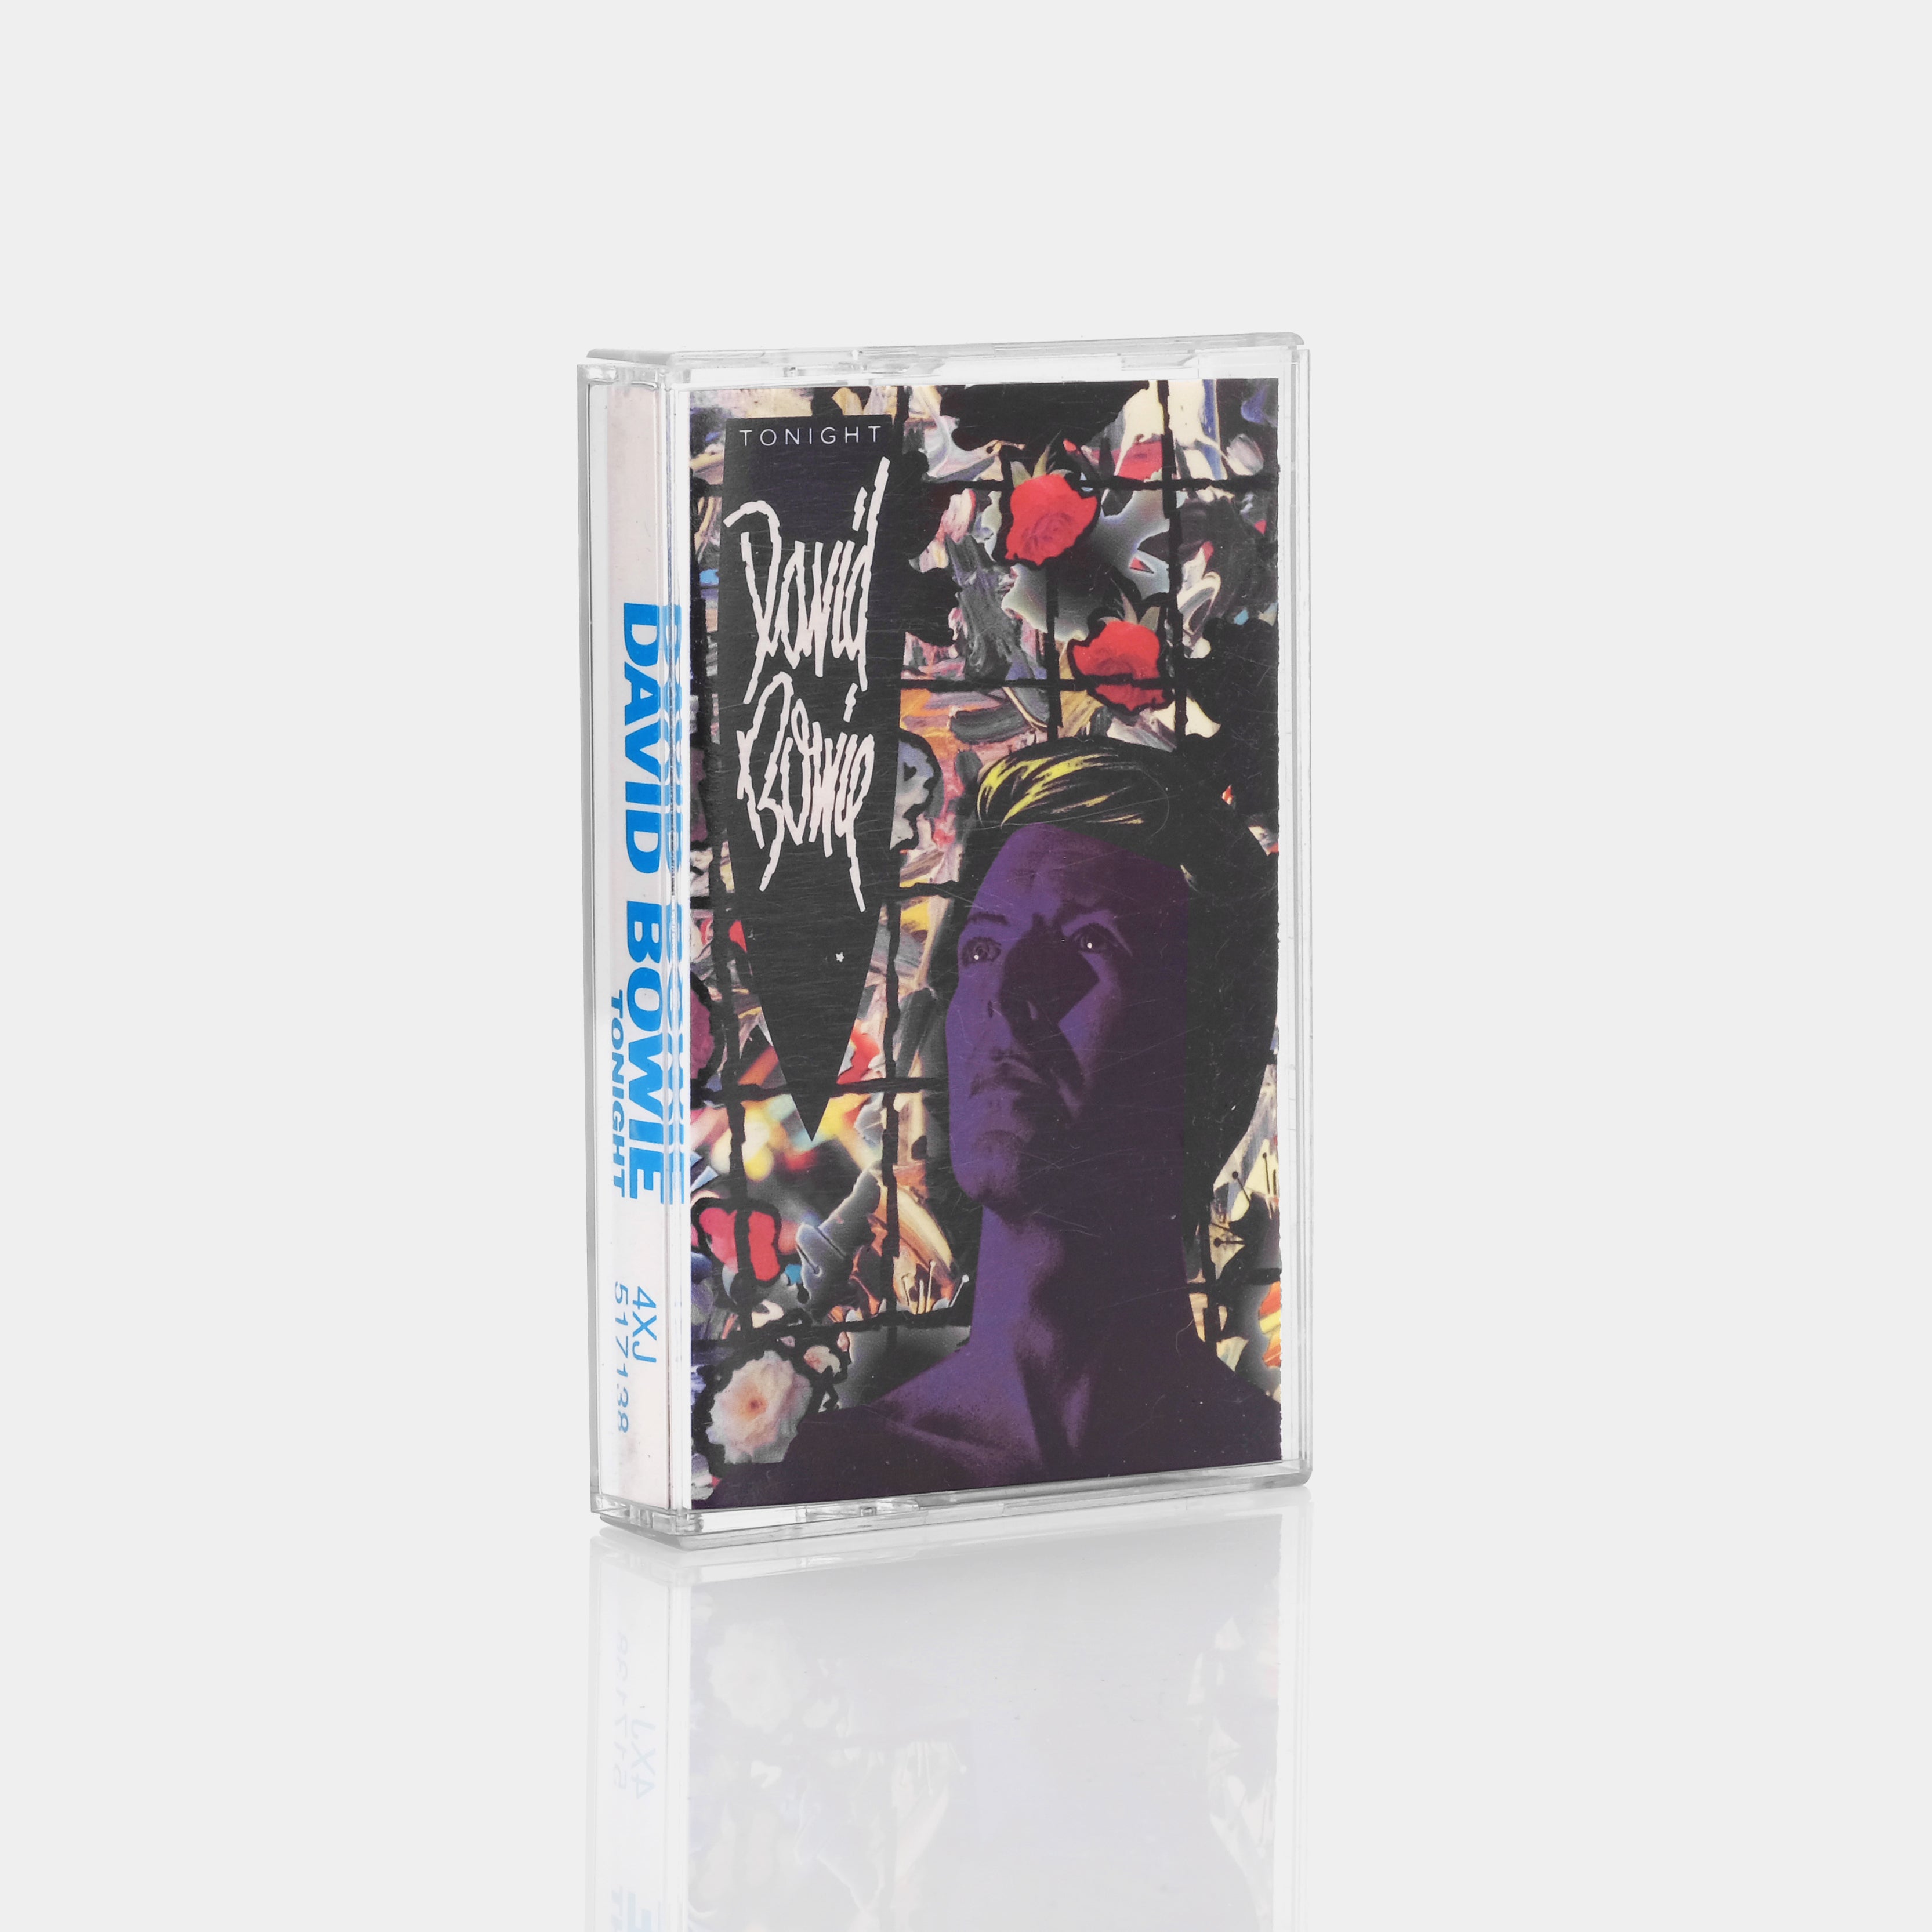 David Bowie - Tonight Cassette Tape